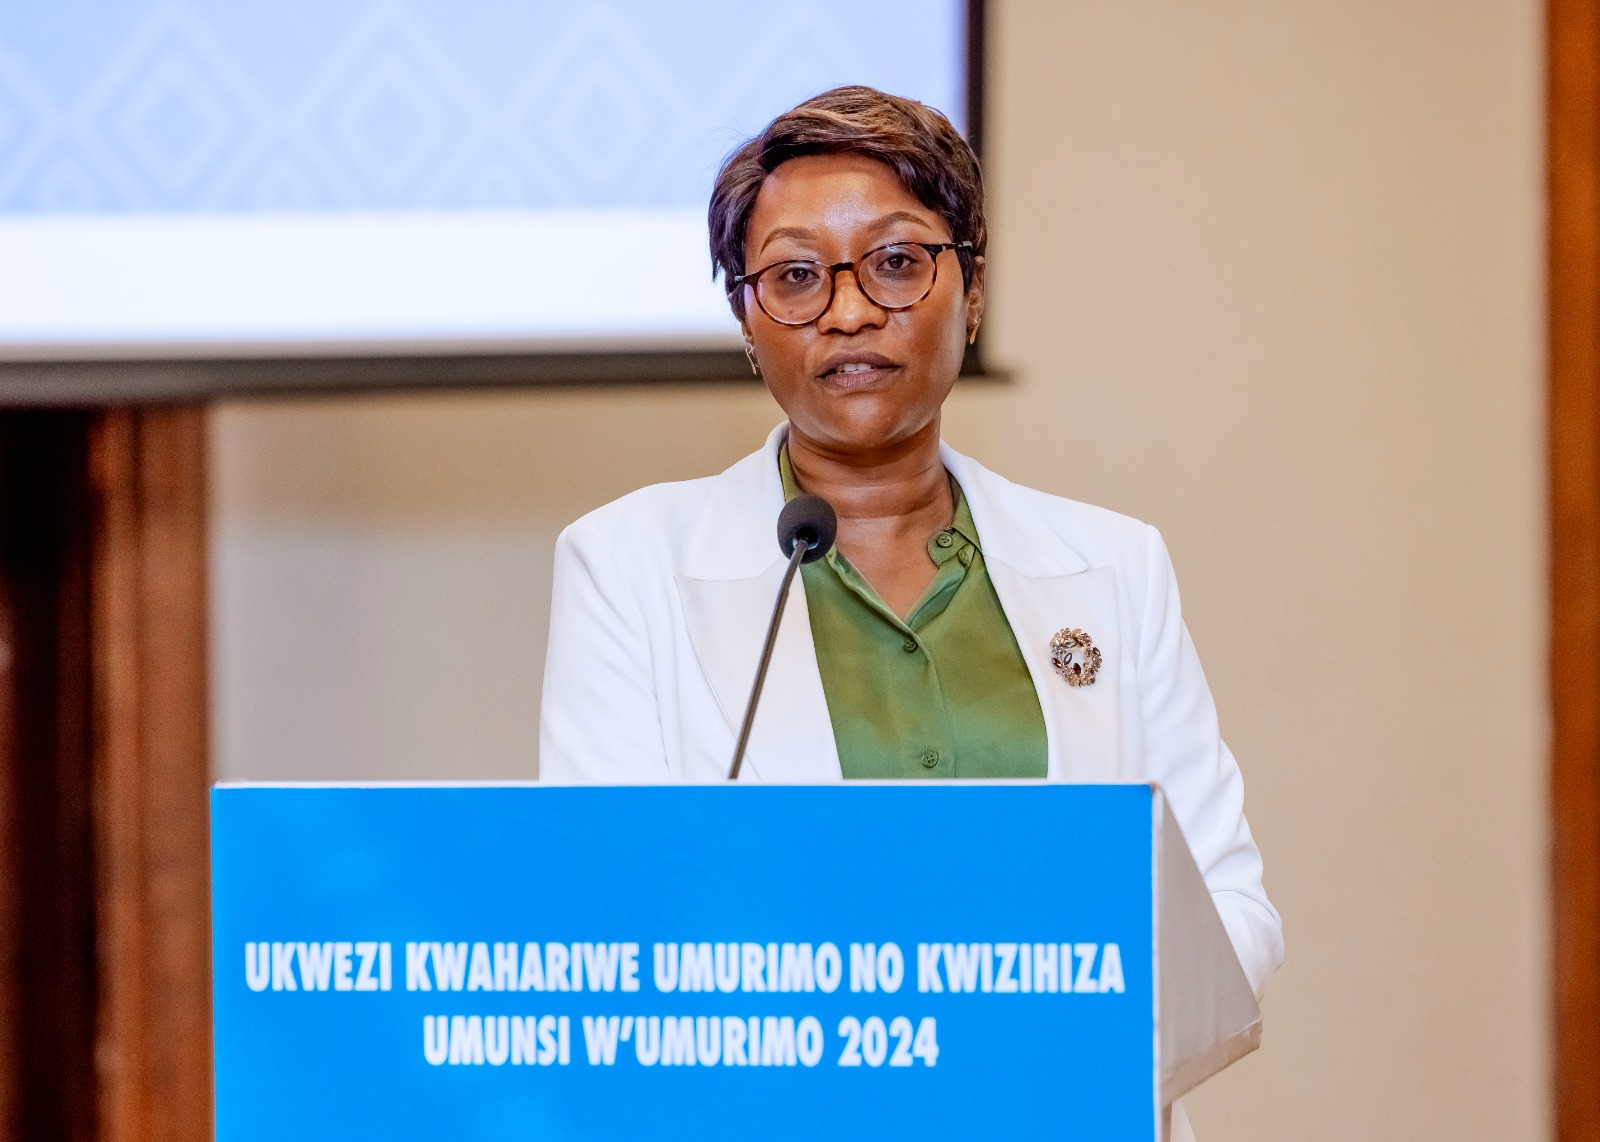 U Rwanda rwahanze 90% by’imirimo rwiyemeje muri NST1